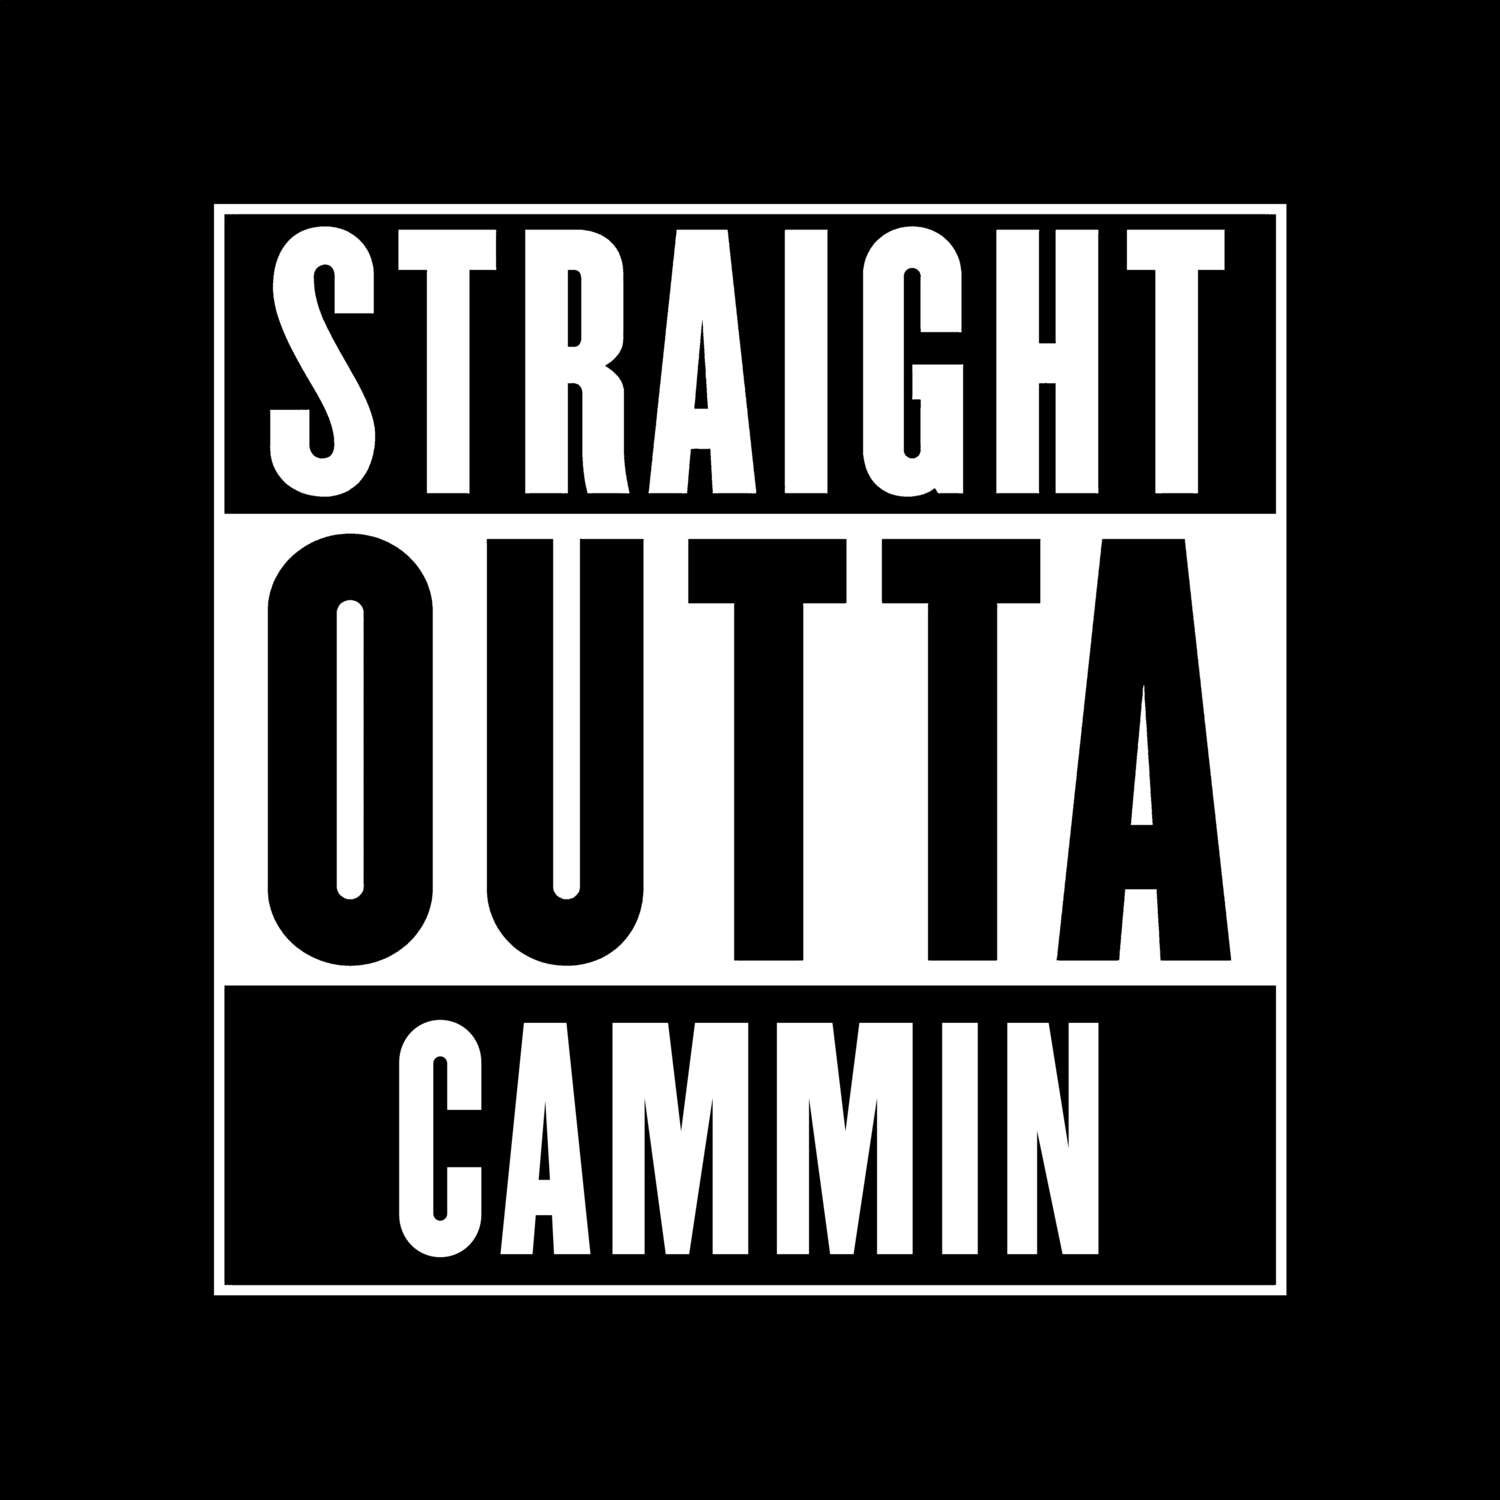 Cammin T-Shirt »Straight Outta«